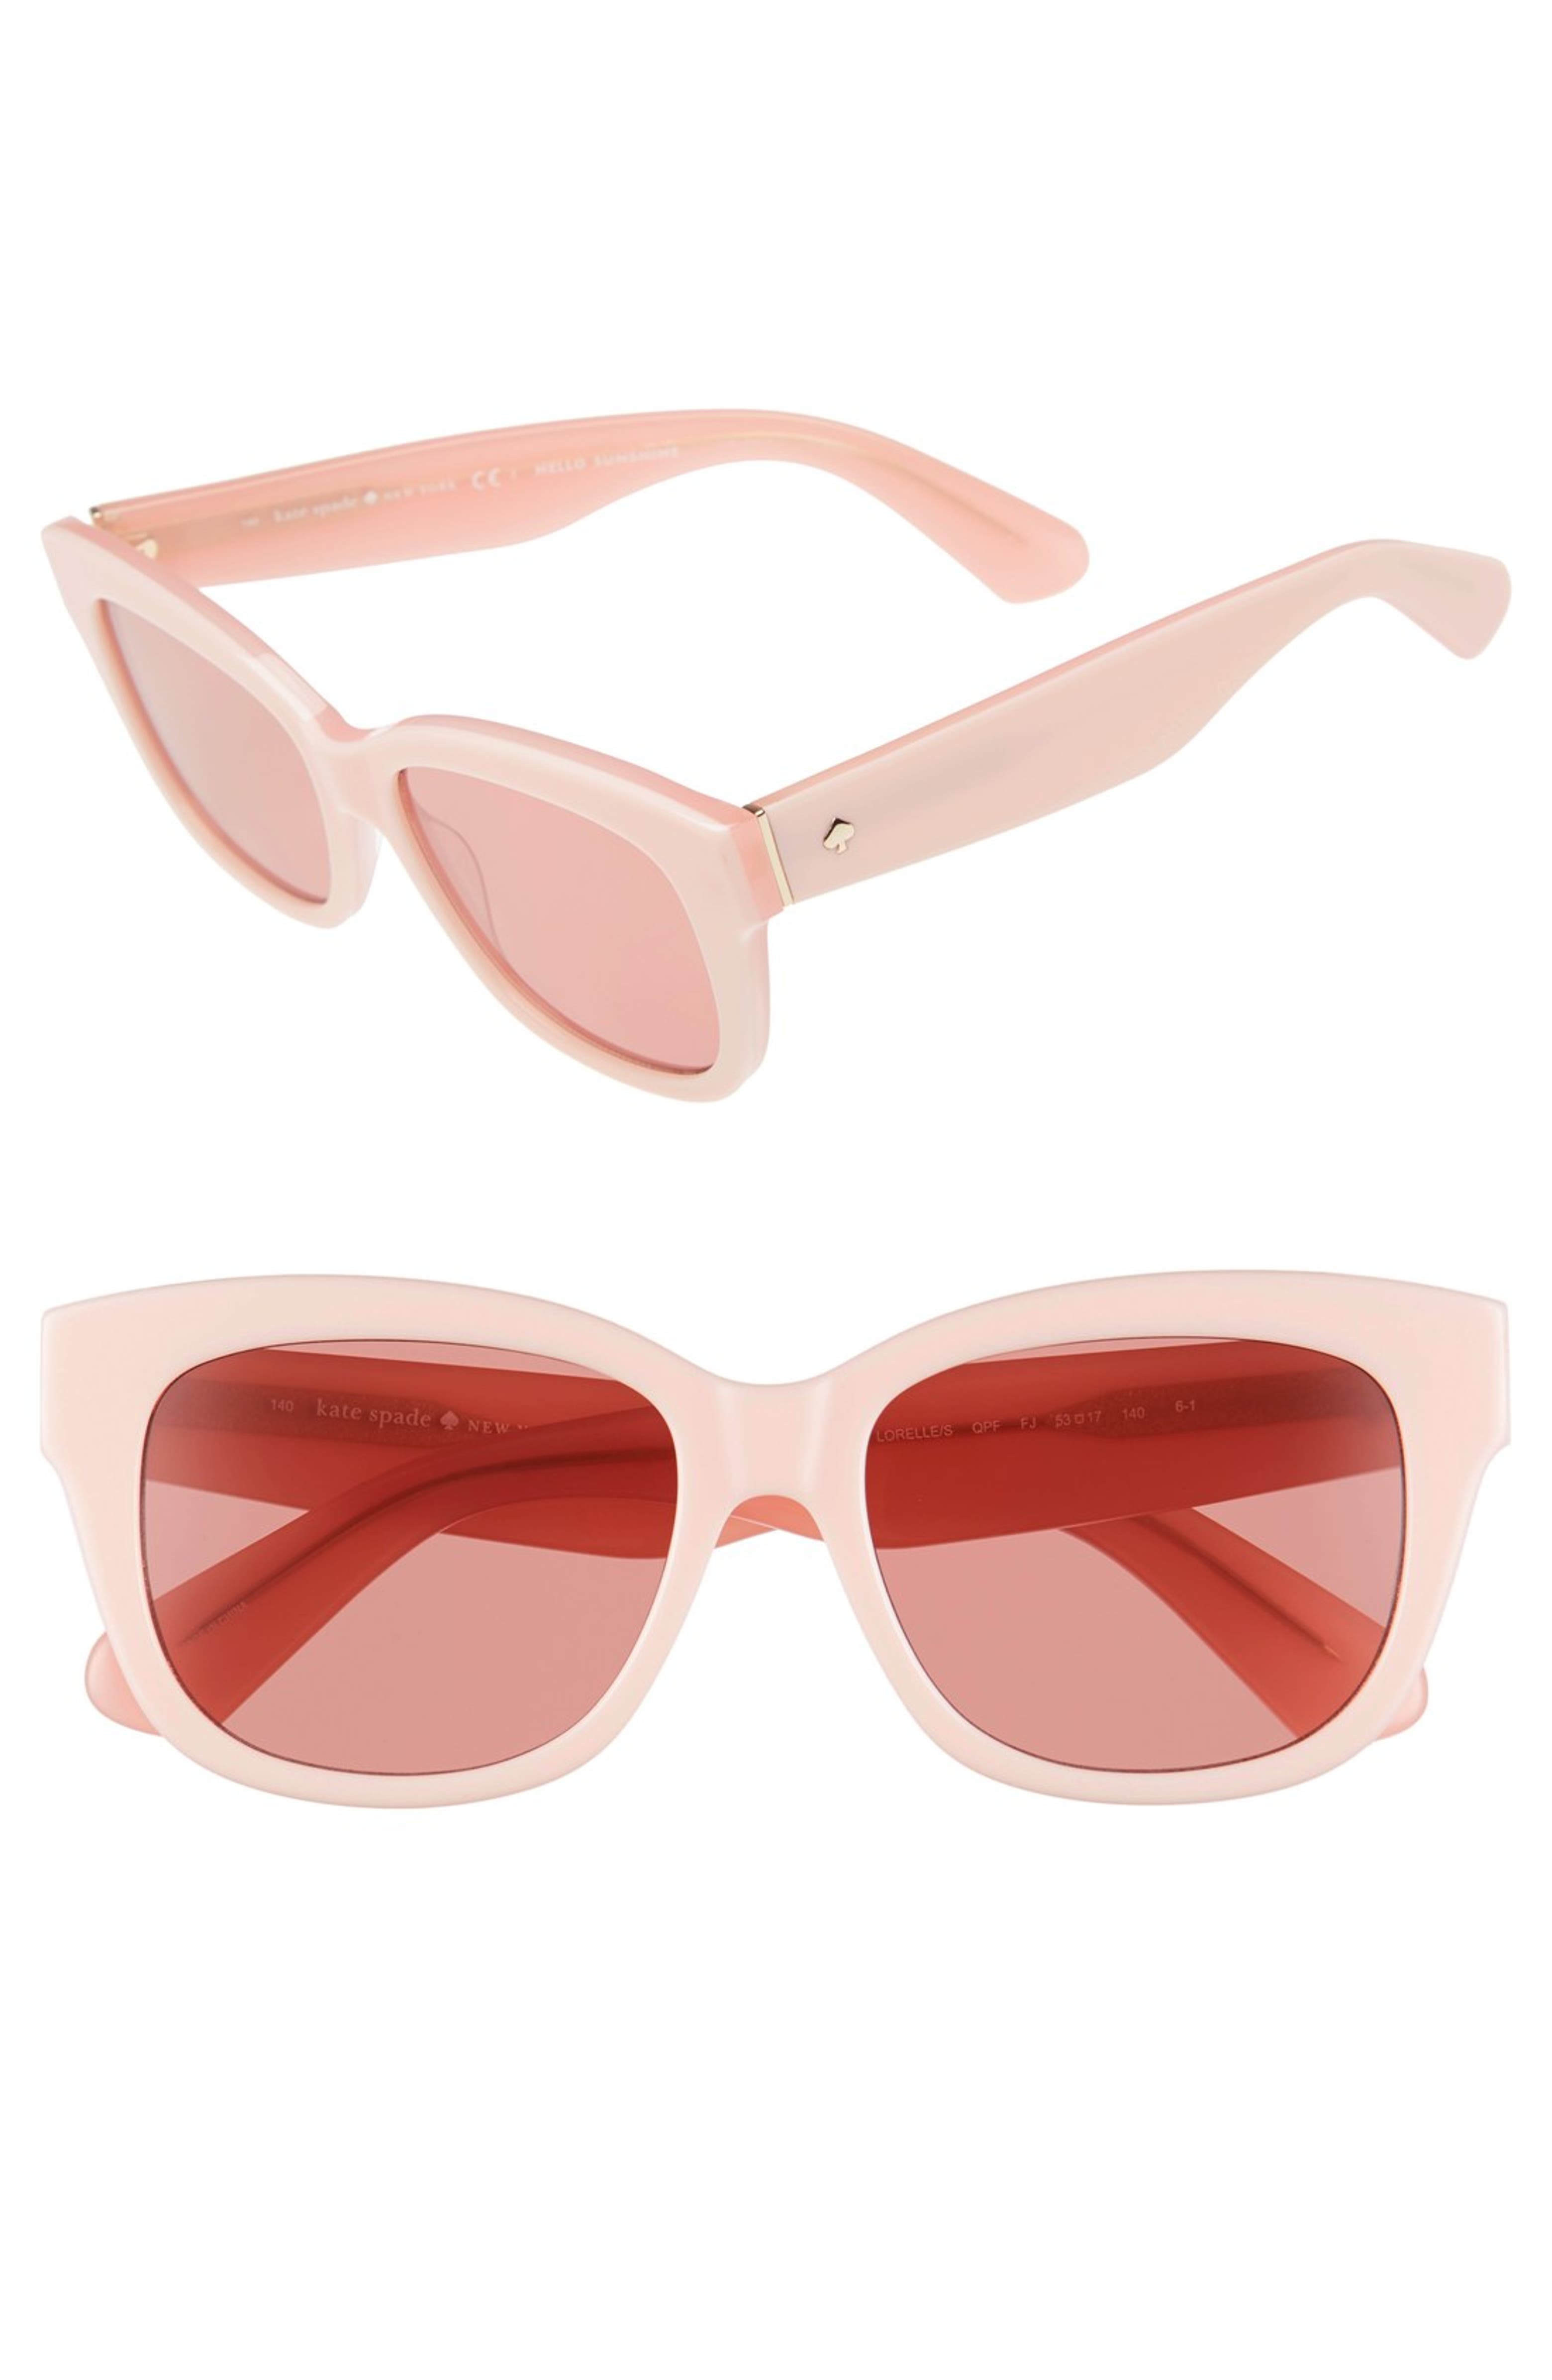 kate spade new york 'lorelle' 53mm cat eye sunglasses | Nordstrom